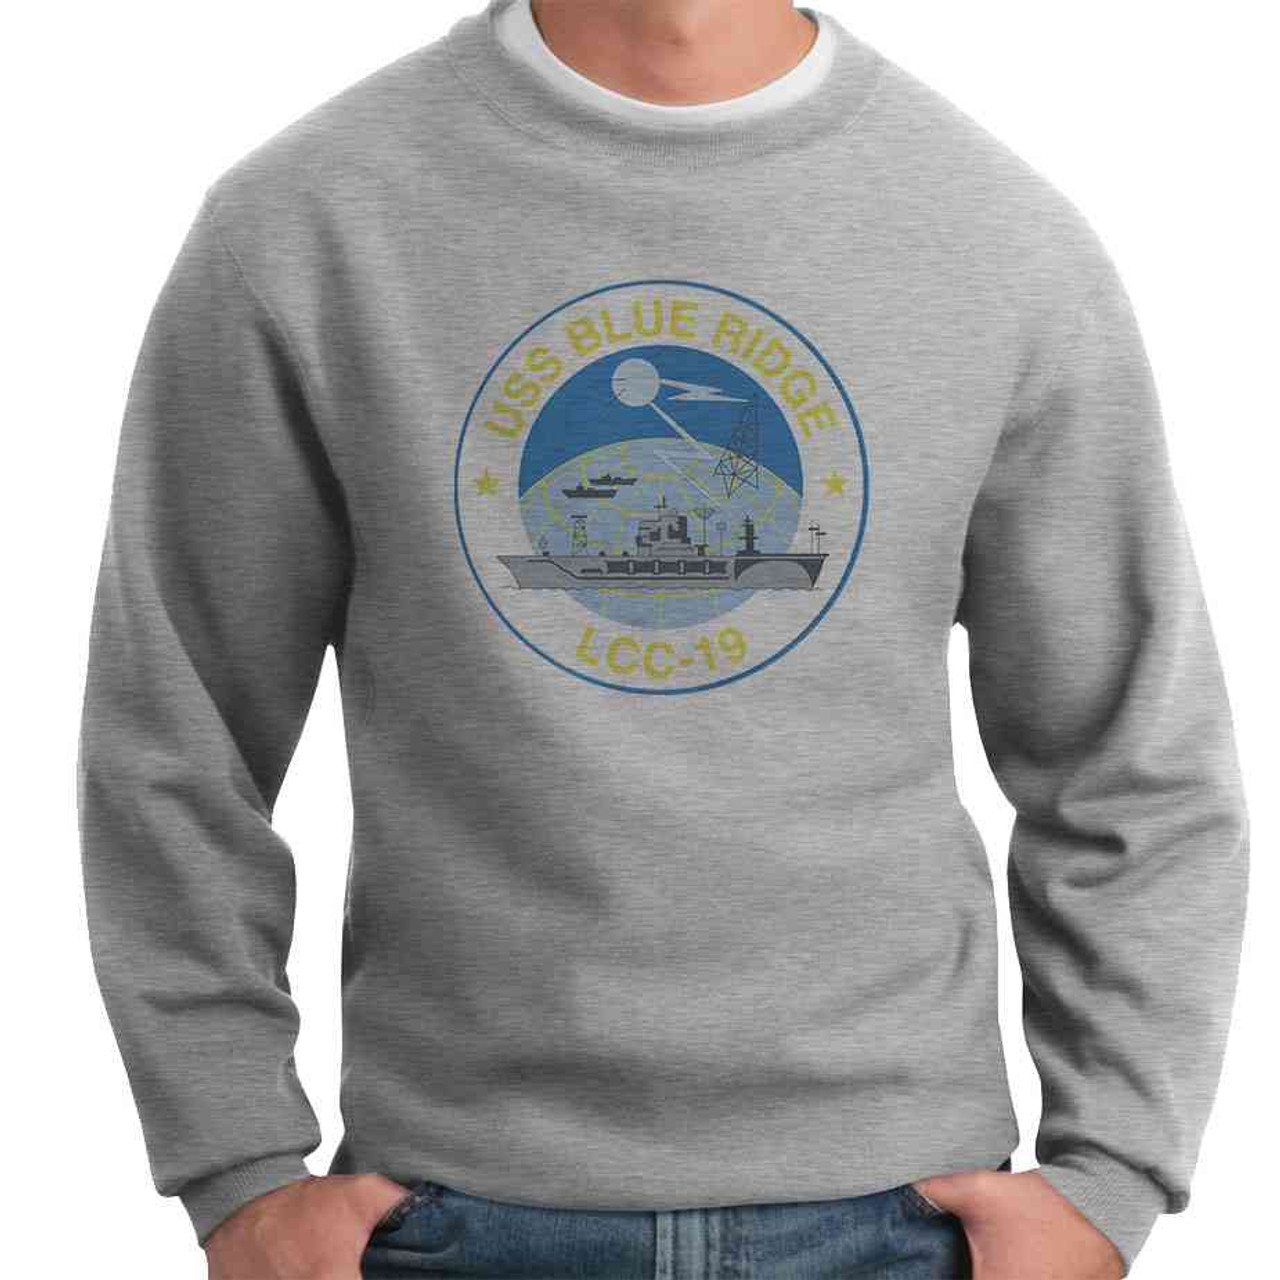 uss blue ridge crewneck sweatshirt